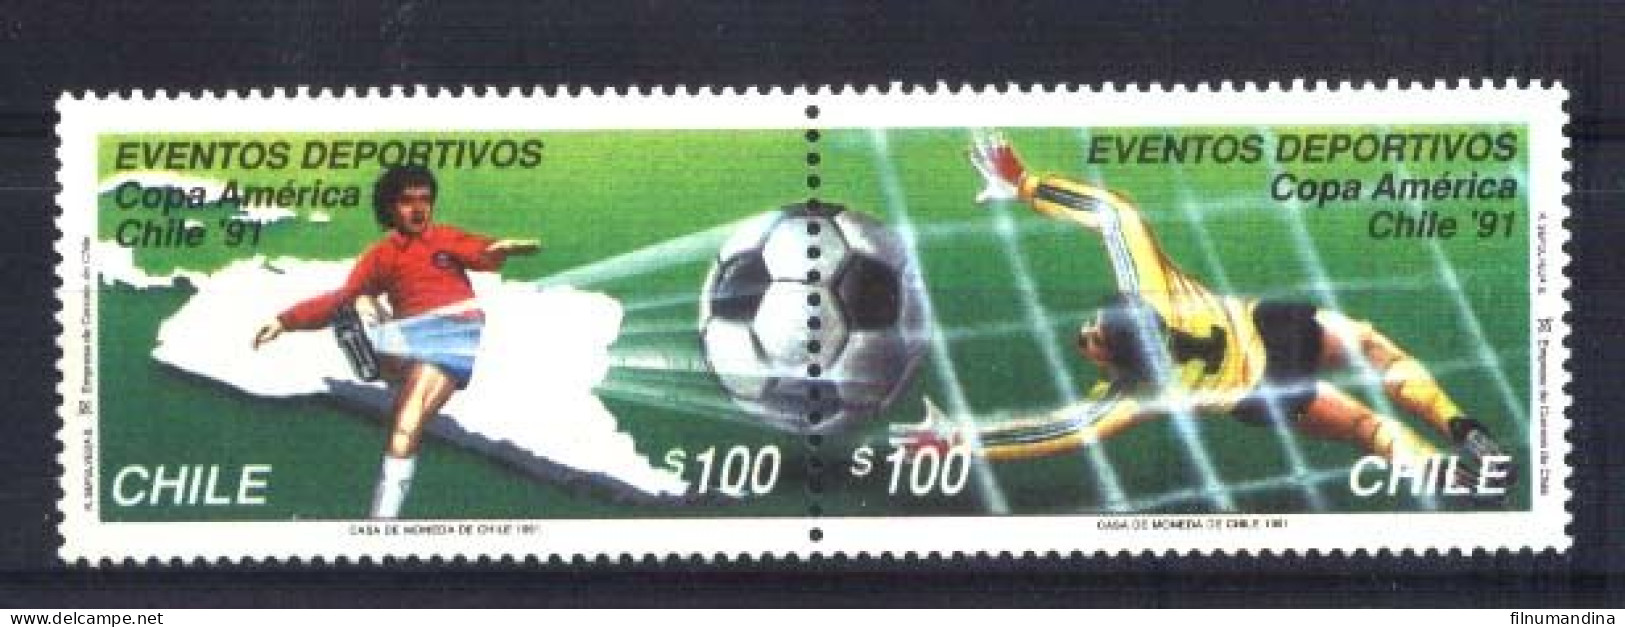 #2599 CHILE 1991 FOOTBALL FUTBOL SOCCER AMERICA CUP YV 1028-9 PAIR MNH - Fußball-Amerikameisterschaft